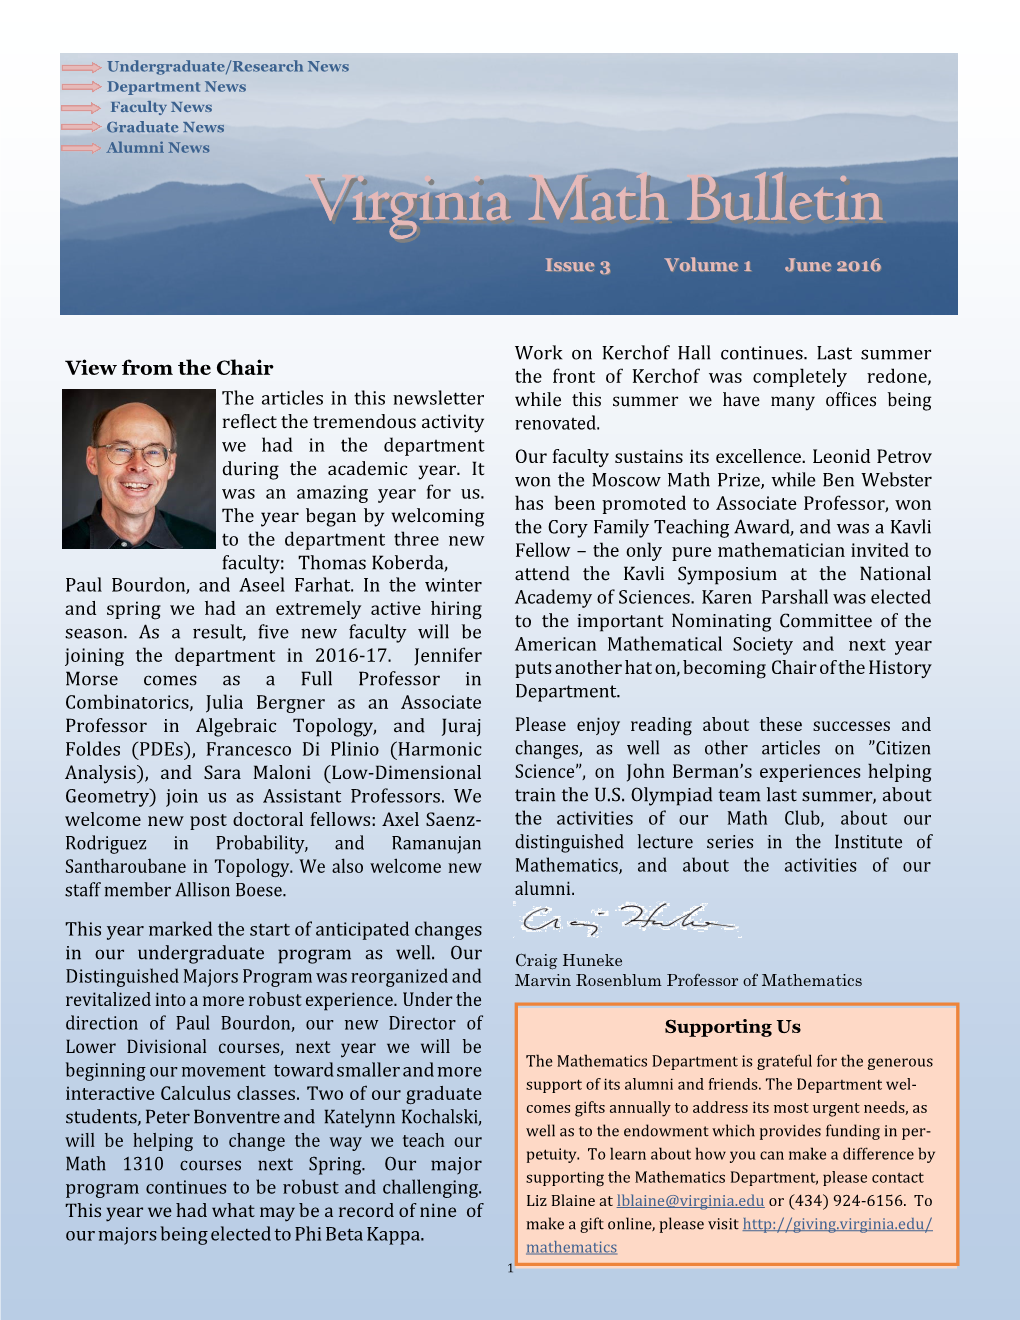 2016 Virginia Math Bulletin